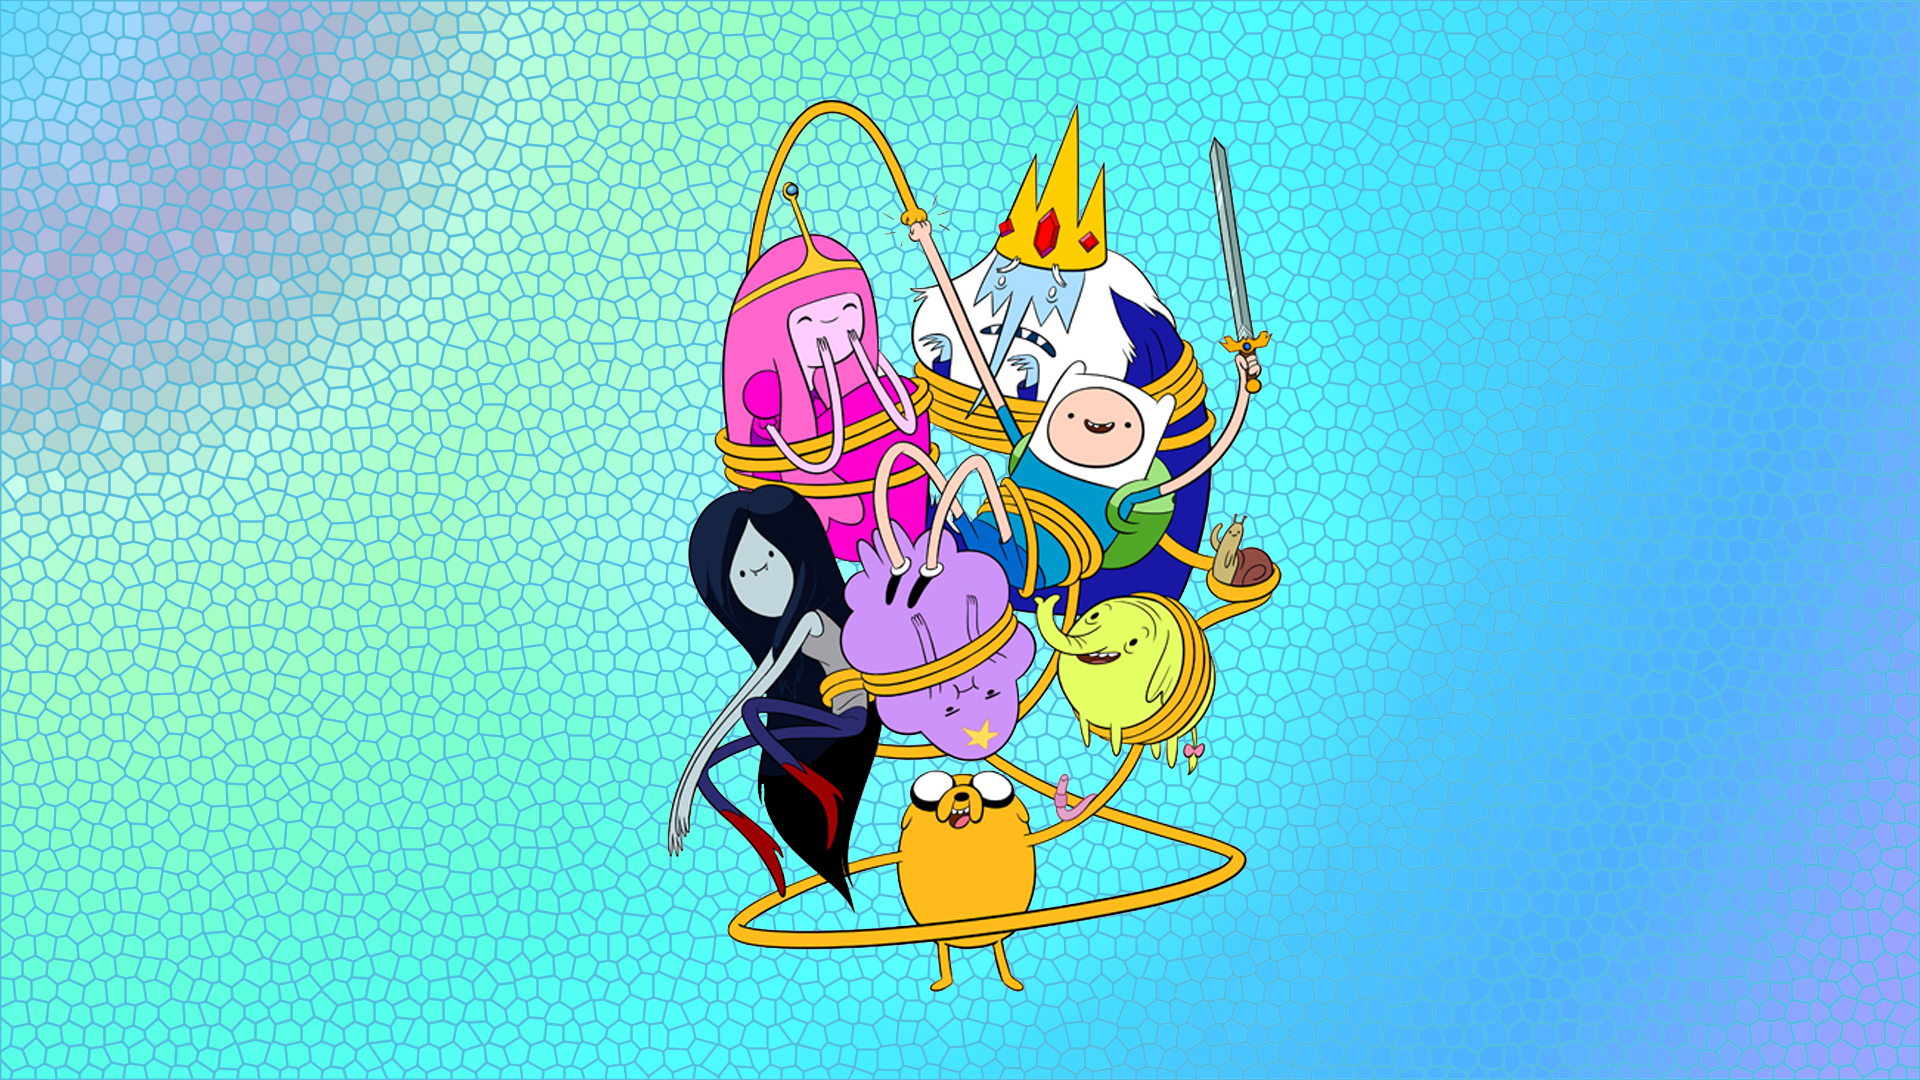 Adventure time wallpaper version 2 by kawaii-panic